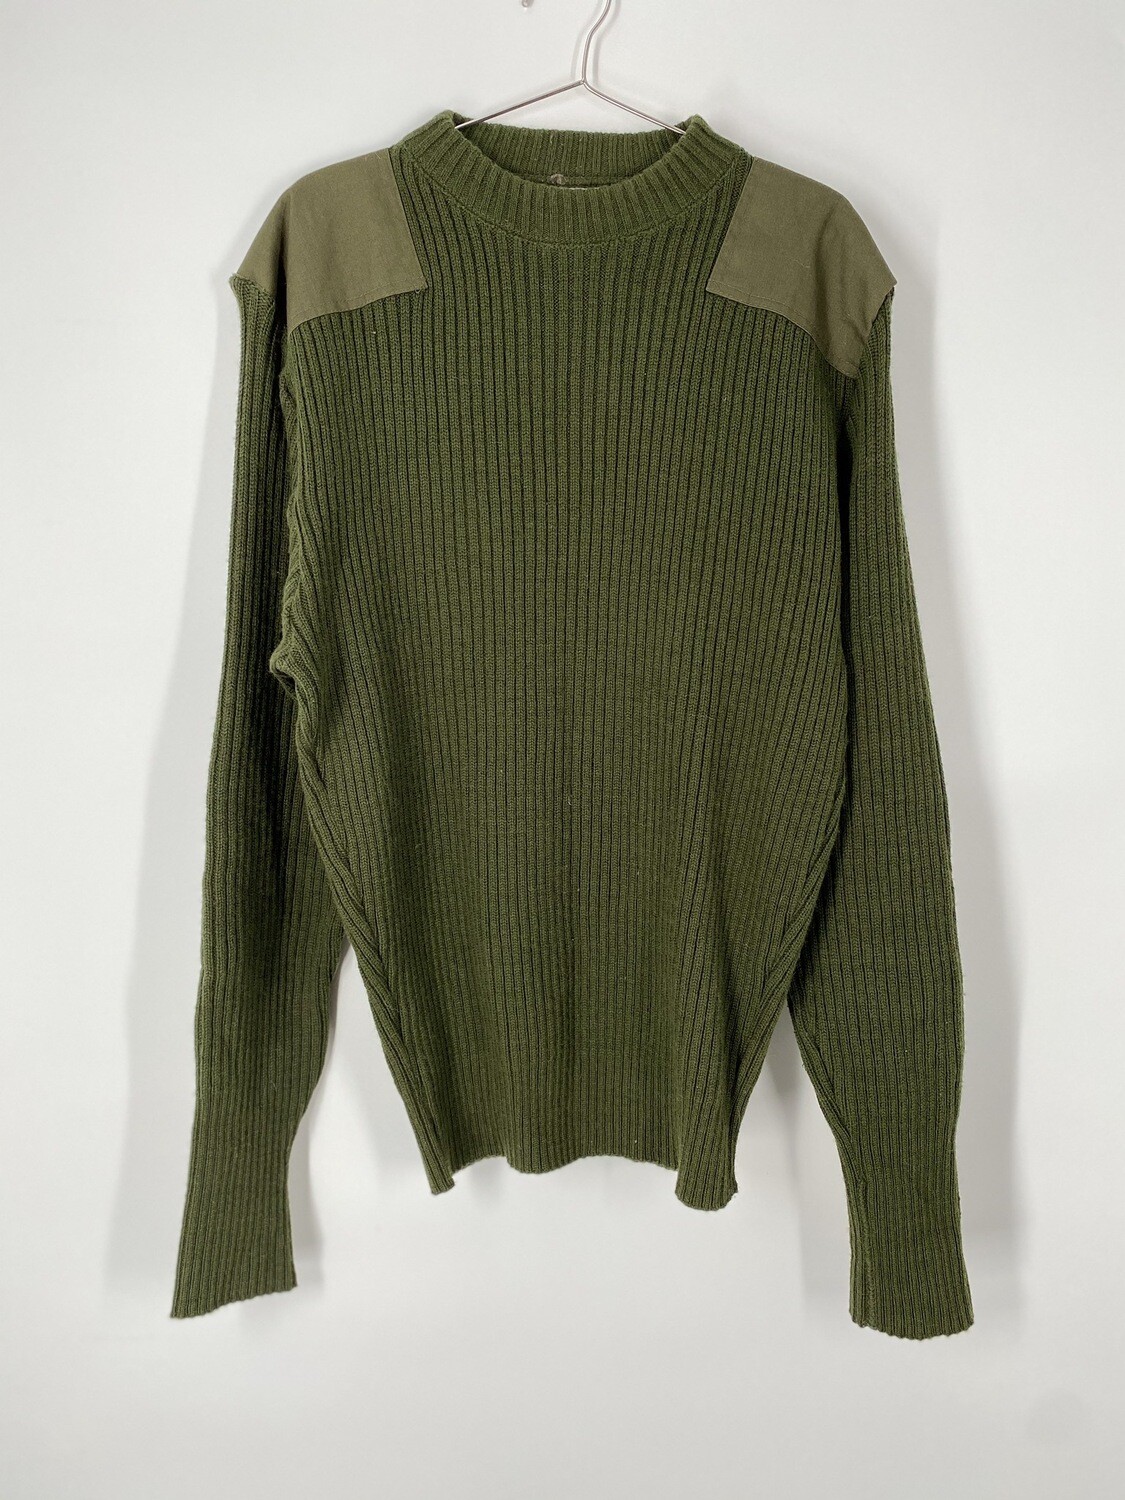 DSCP Sweater Size Medium